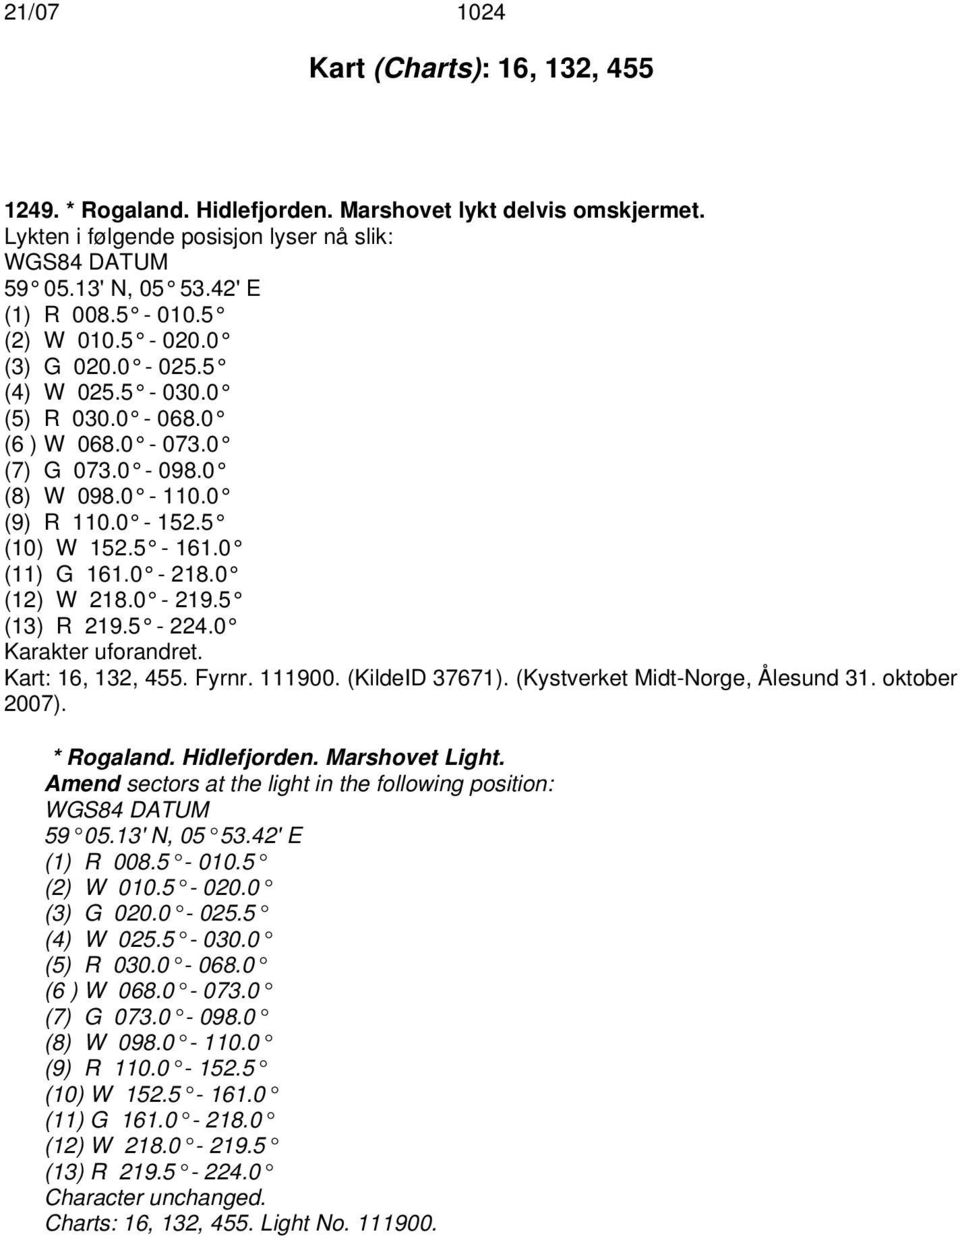 5 (13) R 219.5-224.0 Karakter uforandret. Kart: 16, 132, 455. Fyrnr. 111900. (KildeID 37671). (Kystverket Midt-Norge, Ålesund 31. oktober 2007). * Rogaland. Hidlefjorden. Marshovet Light.